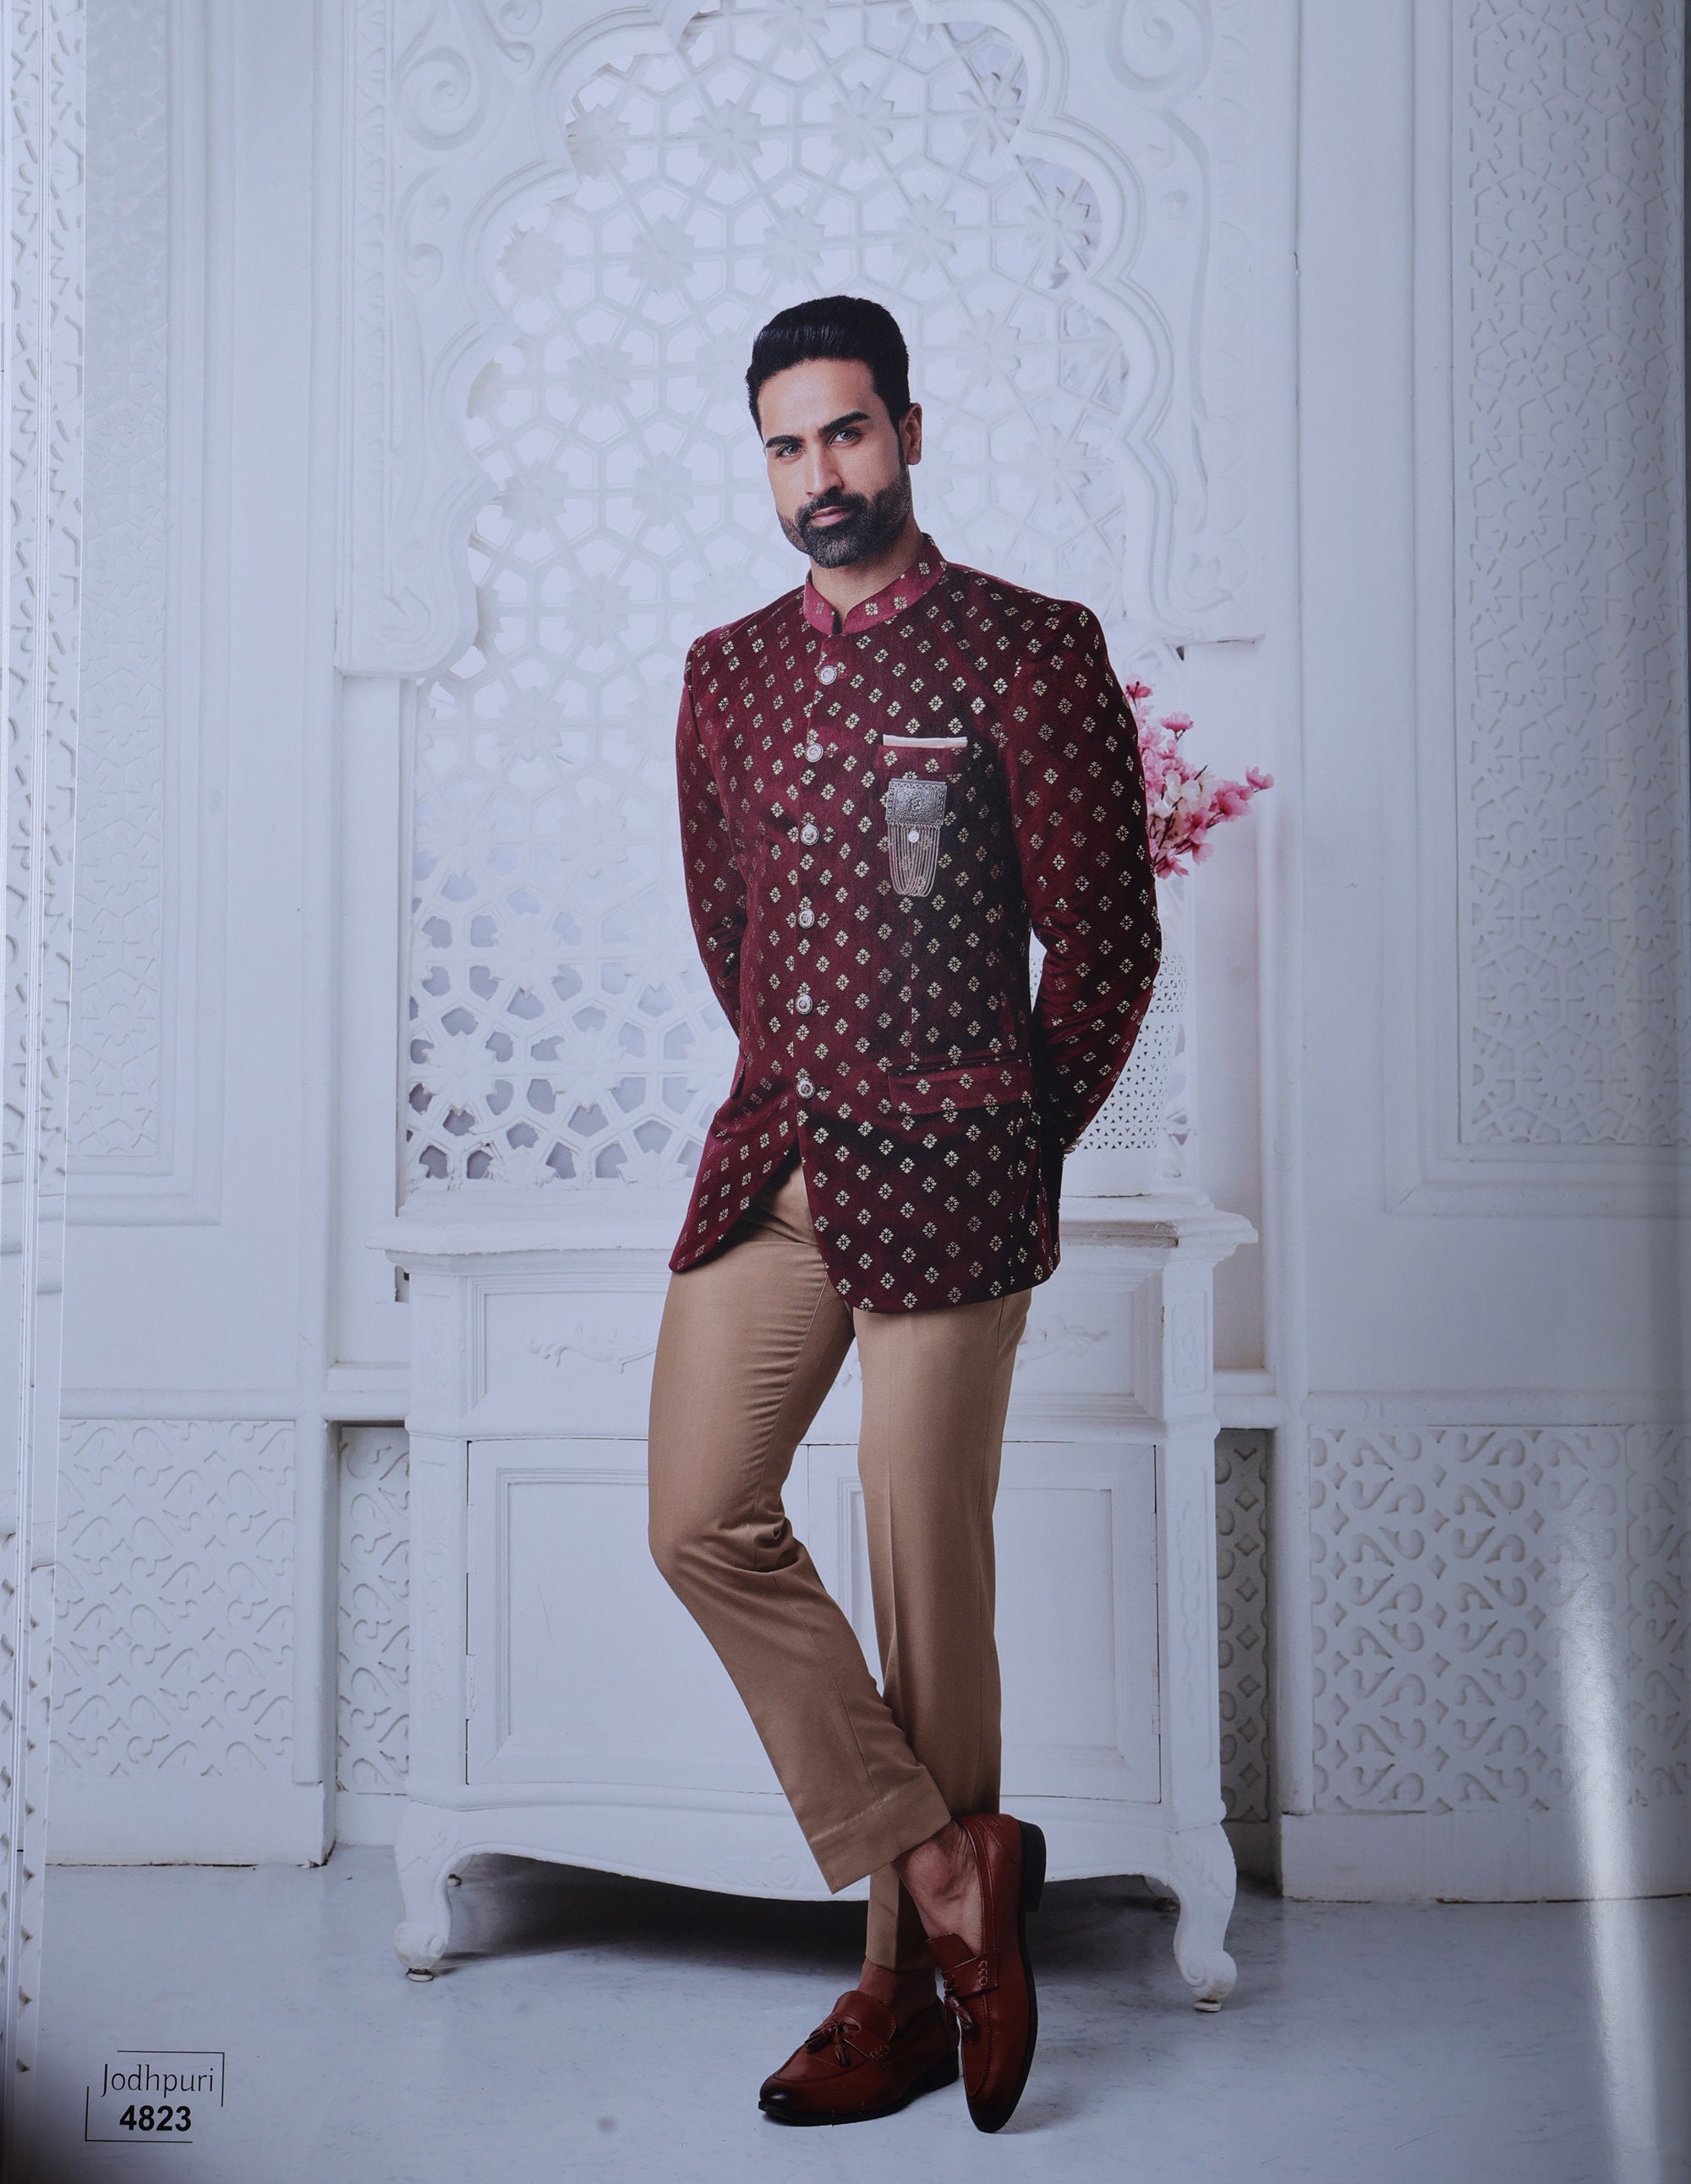 Buy Jodhpuri Suit For Men Online at Best Price at The HUB